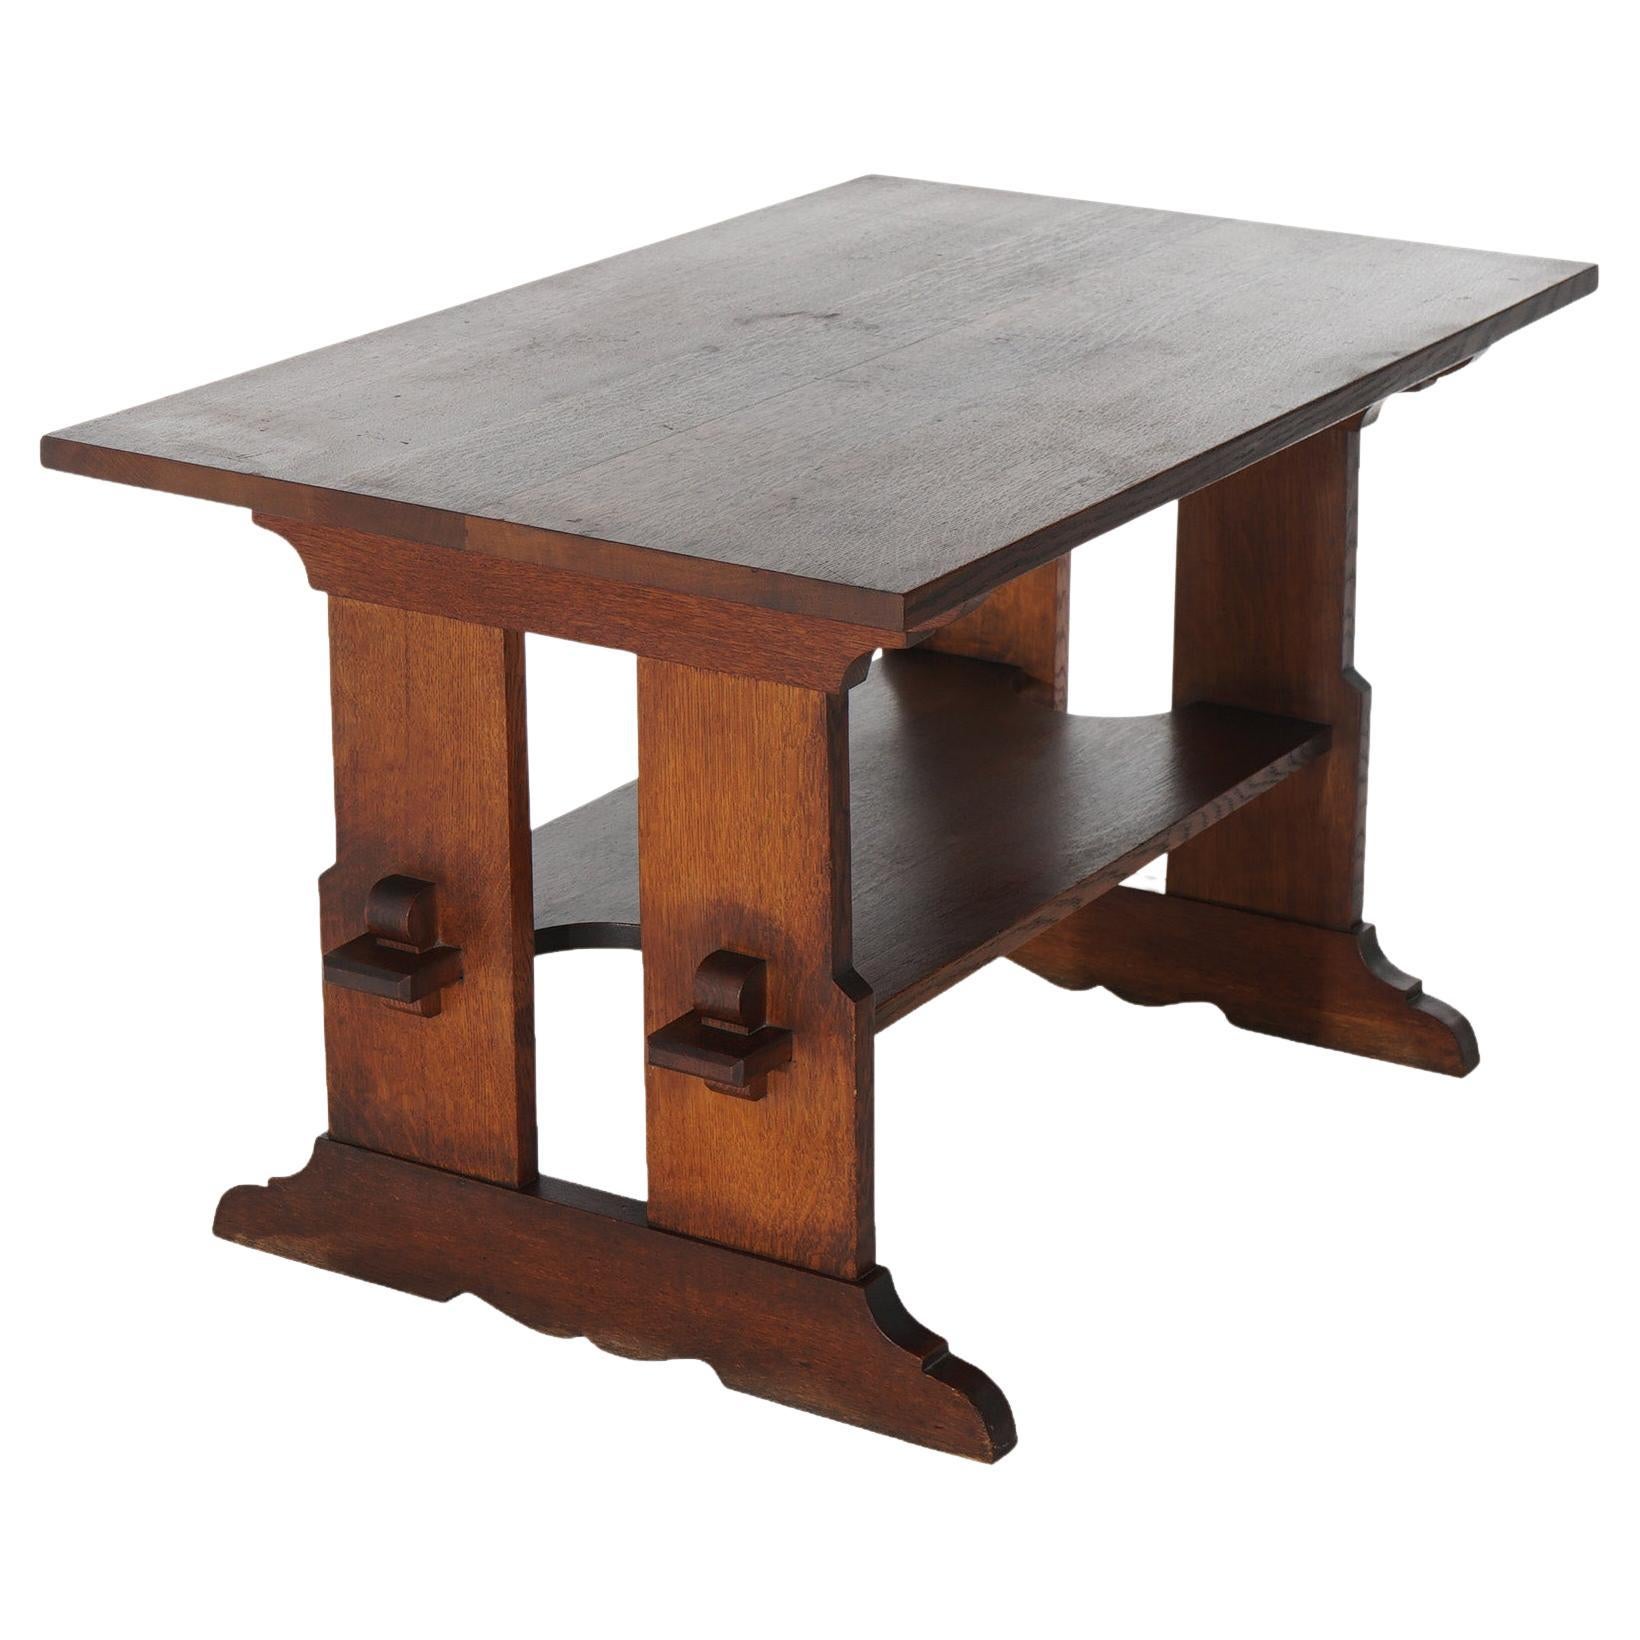 Antique Arts & Crafts Stickley Mission Oak Trestle Table Circa 1910